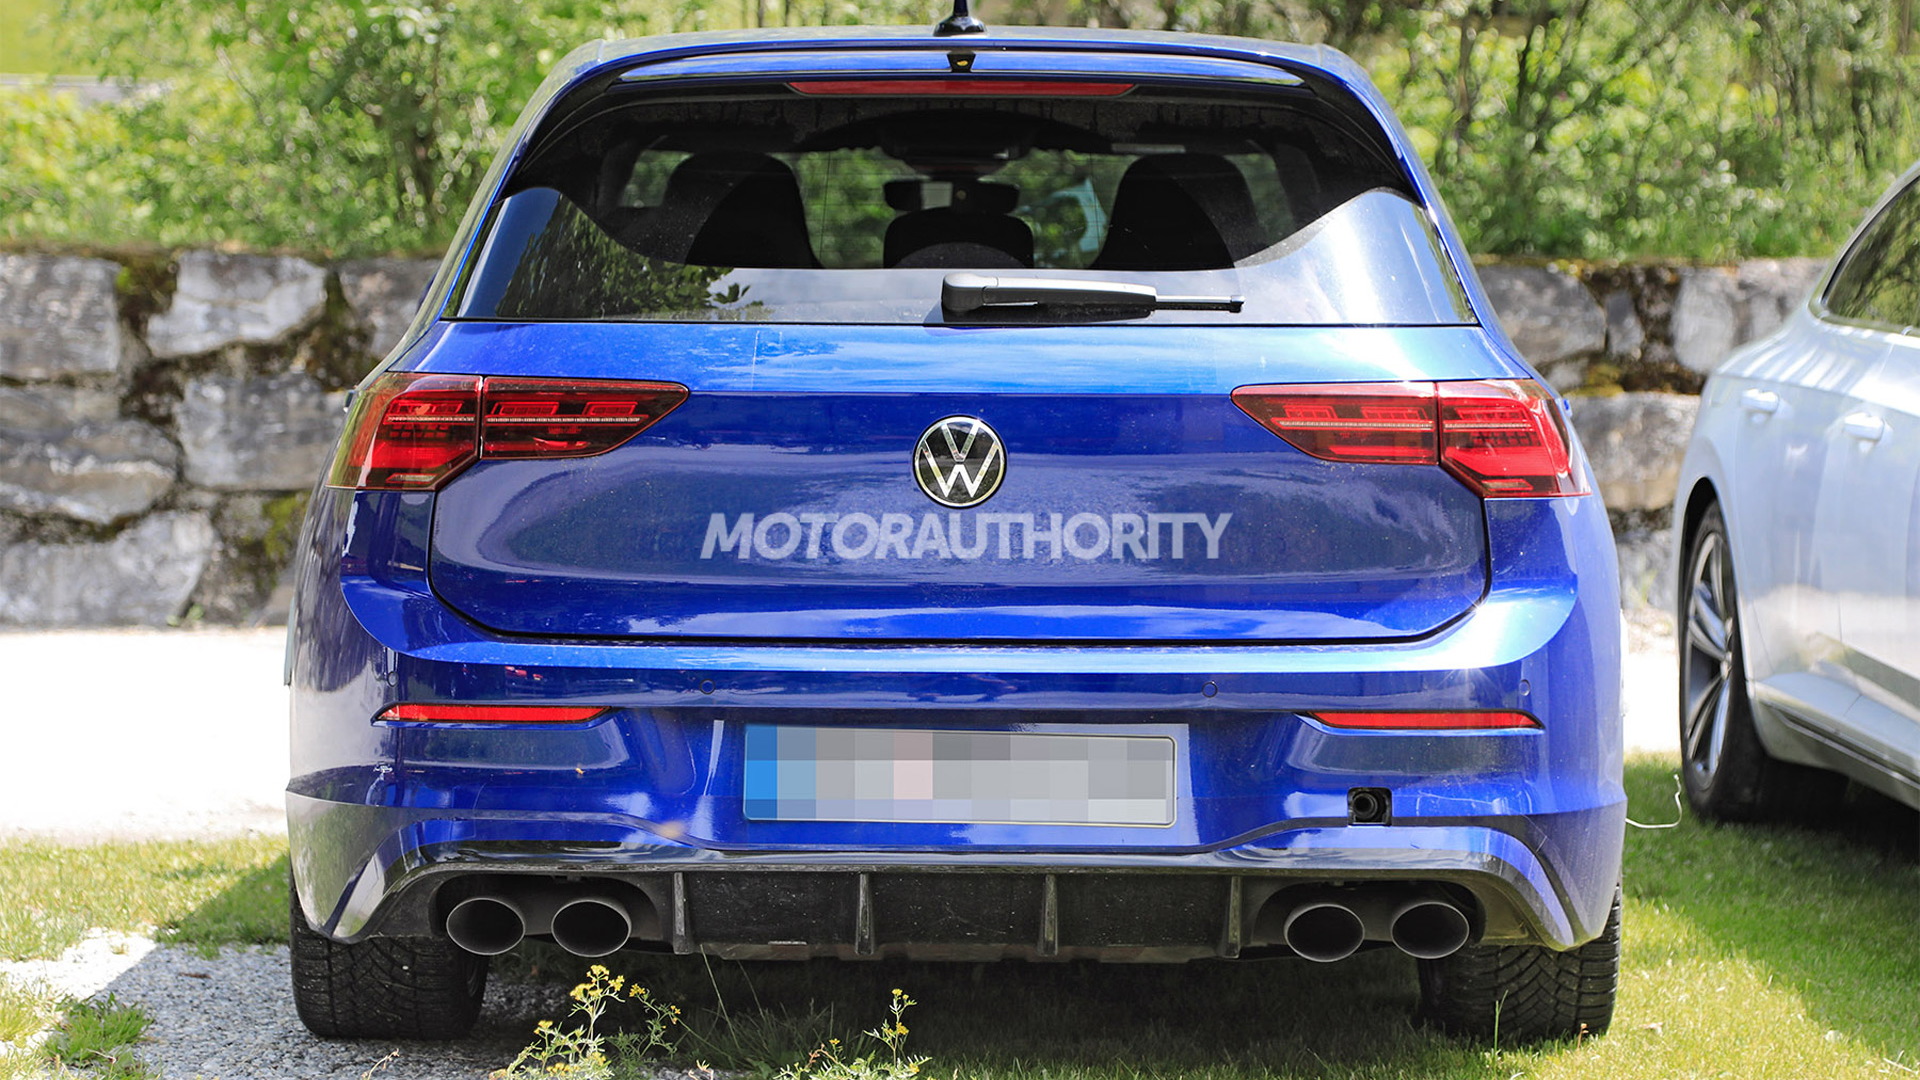 2022 Volkswagen Golf R spy shots - Photo credit: S. Baldauf/SB-Medien